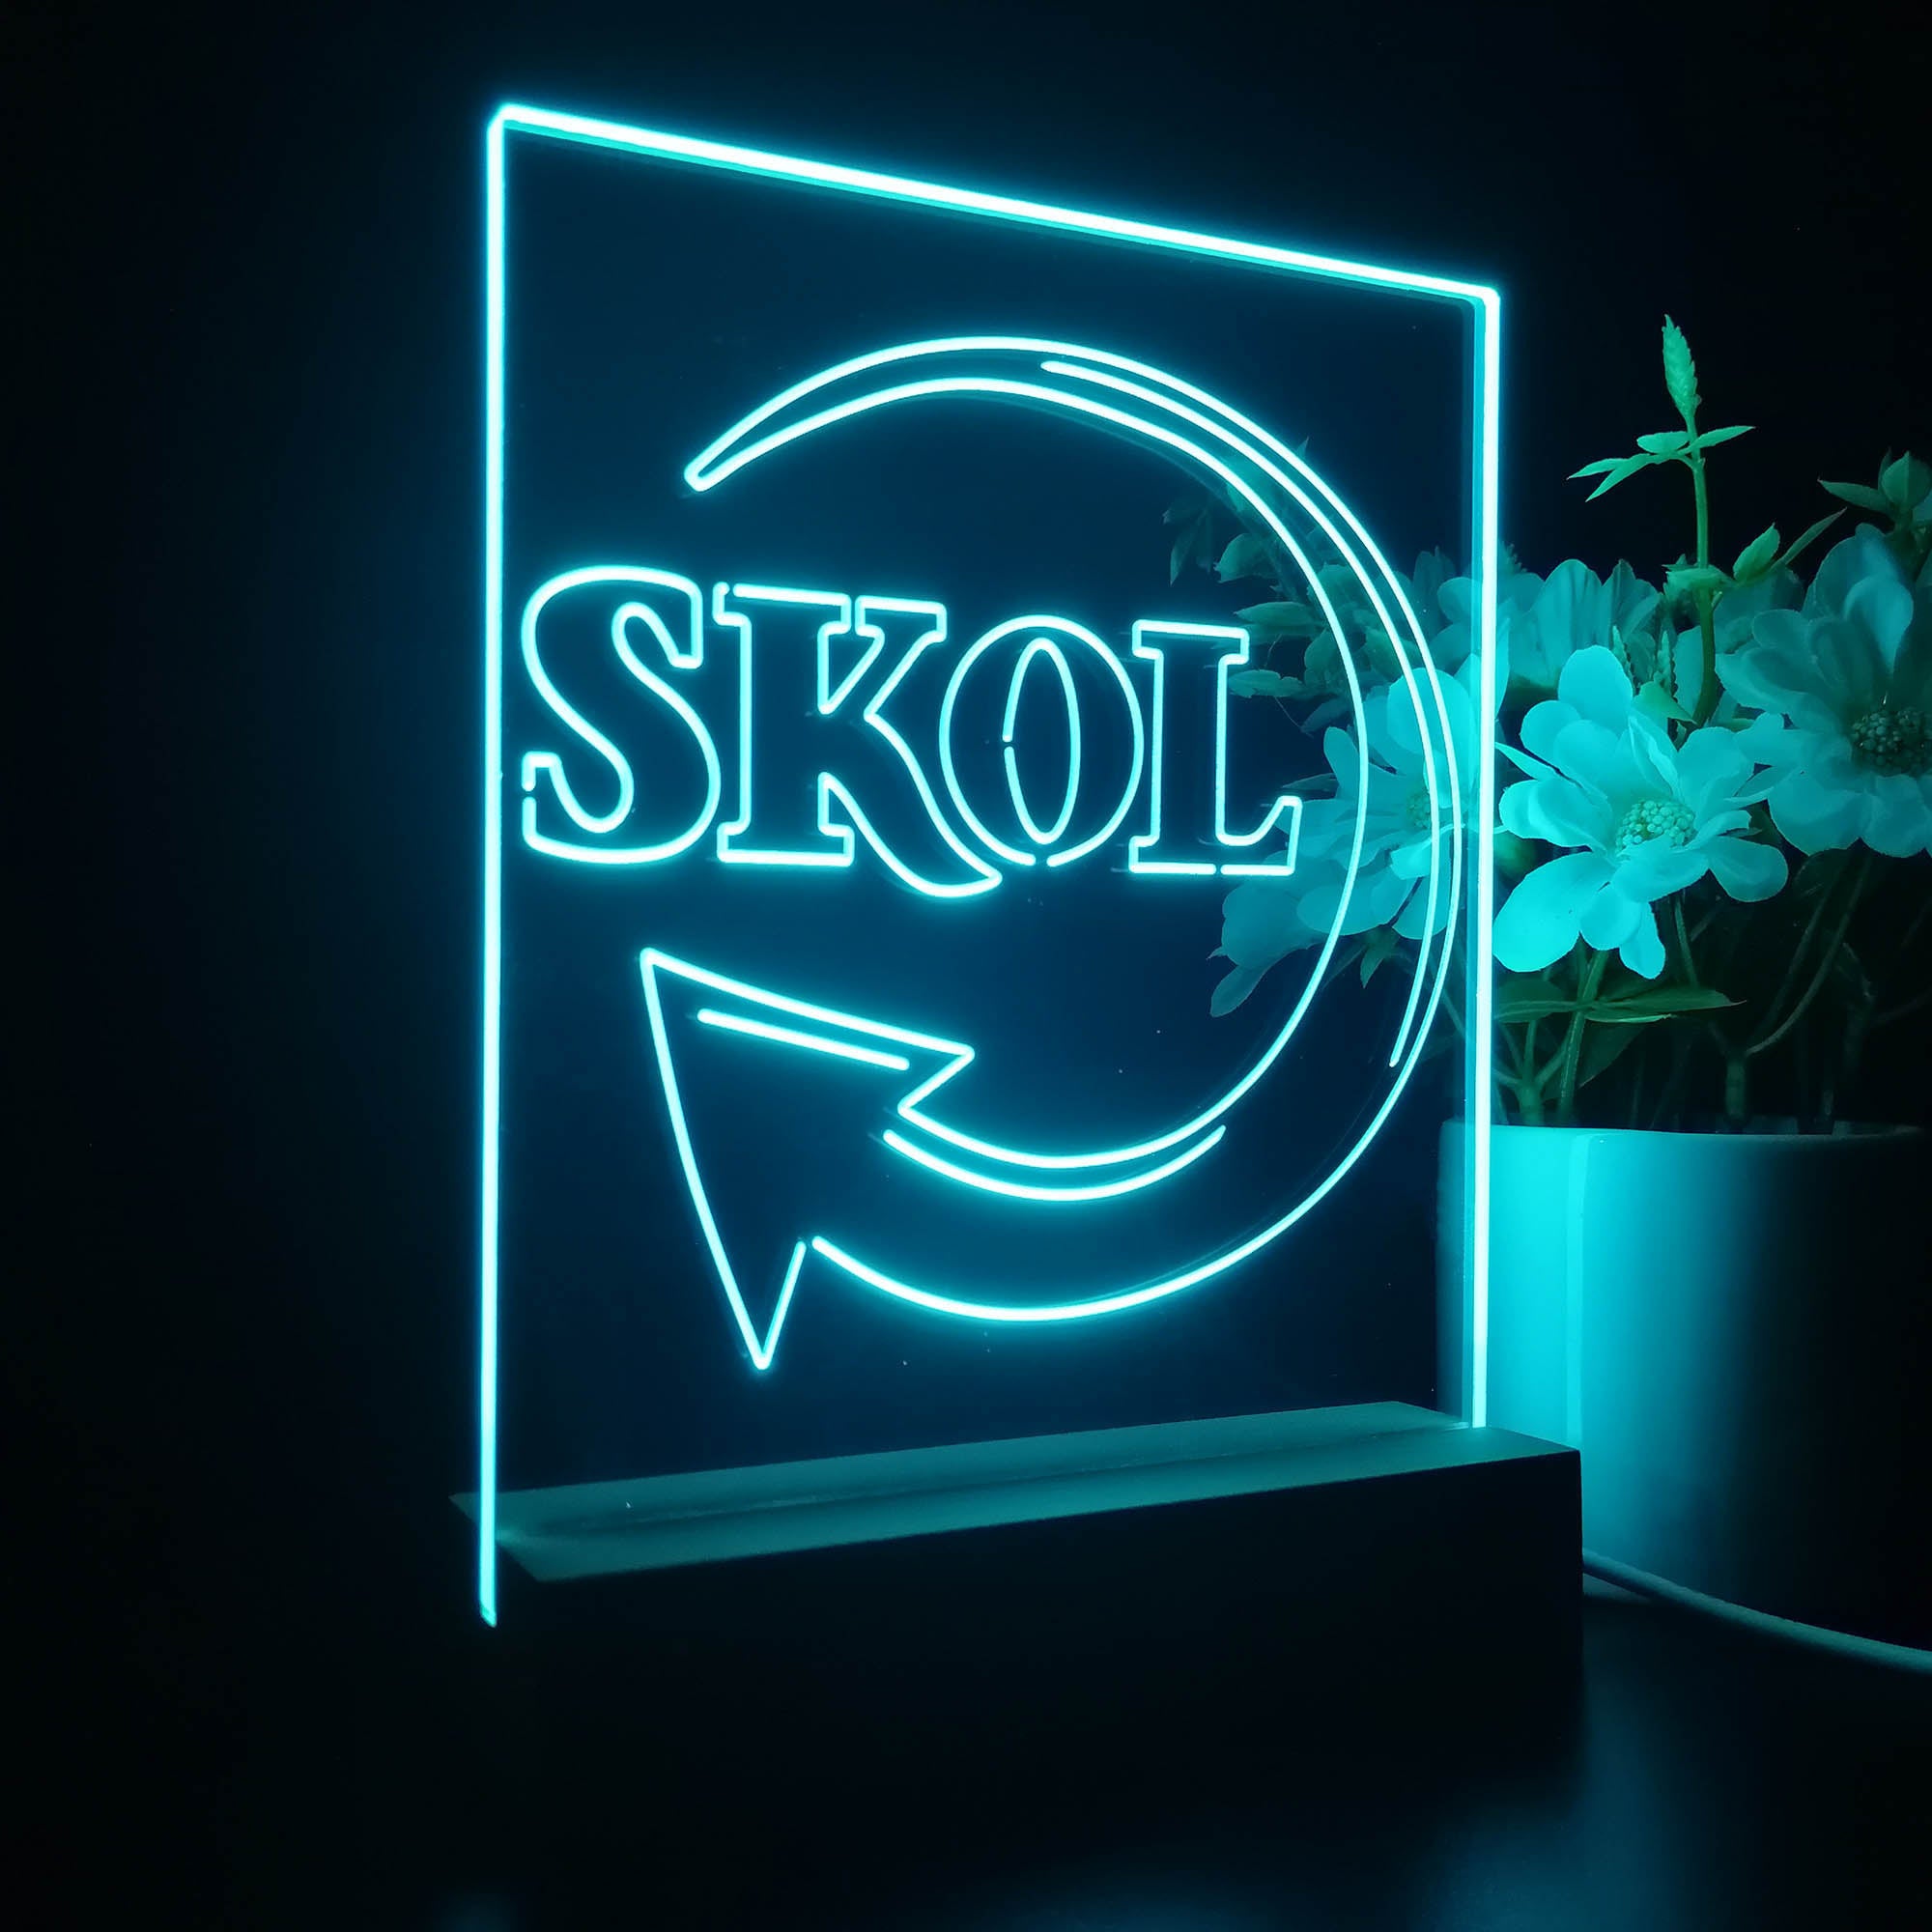 SKOL Bar Night Light LED Sign